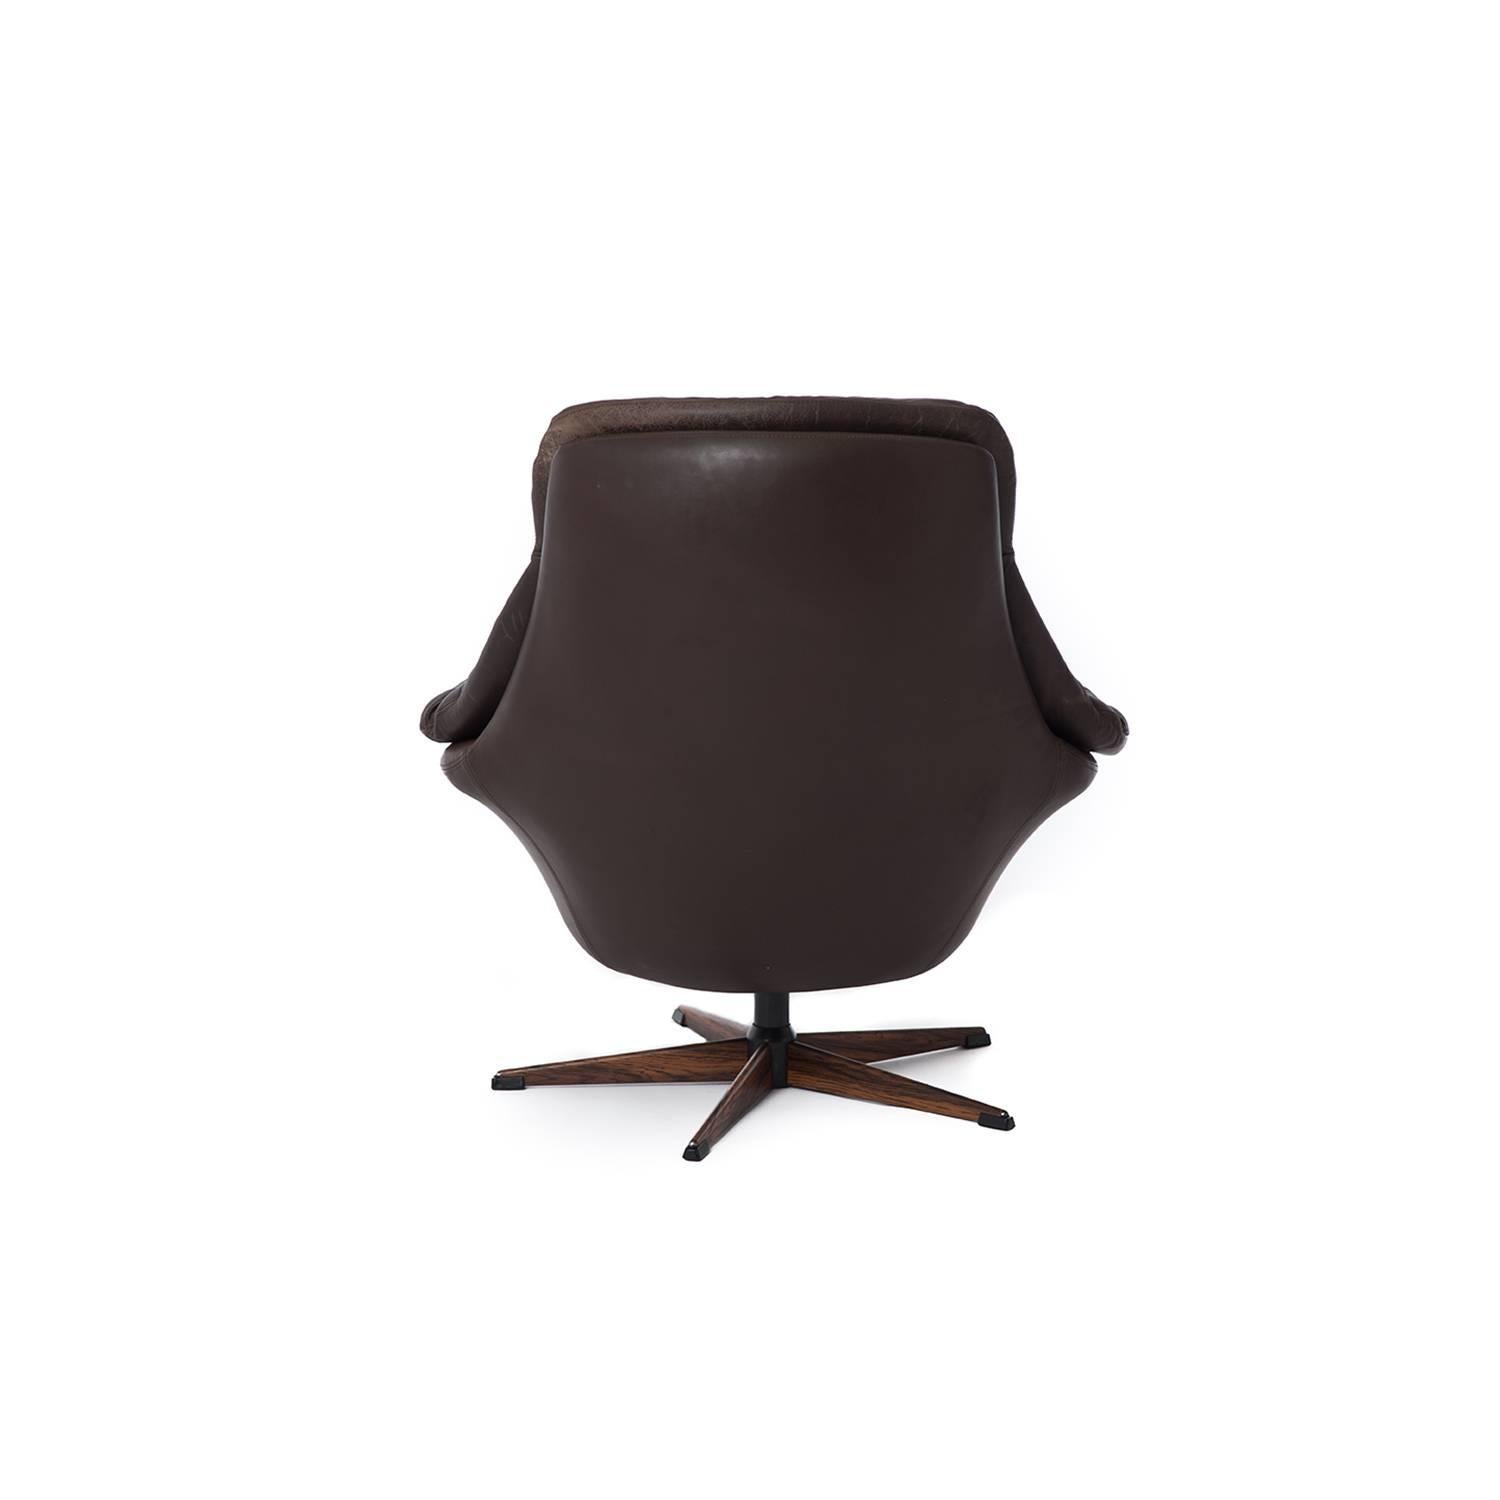 20th Century Danish Modern Swivel Glove Chair in Espresso Leather by H. W. Klein